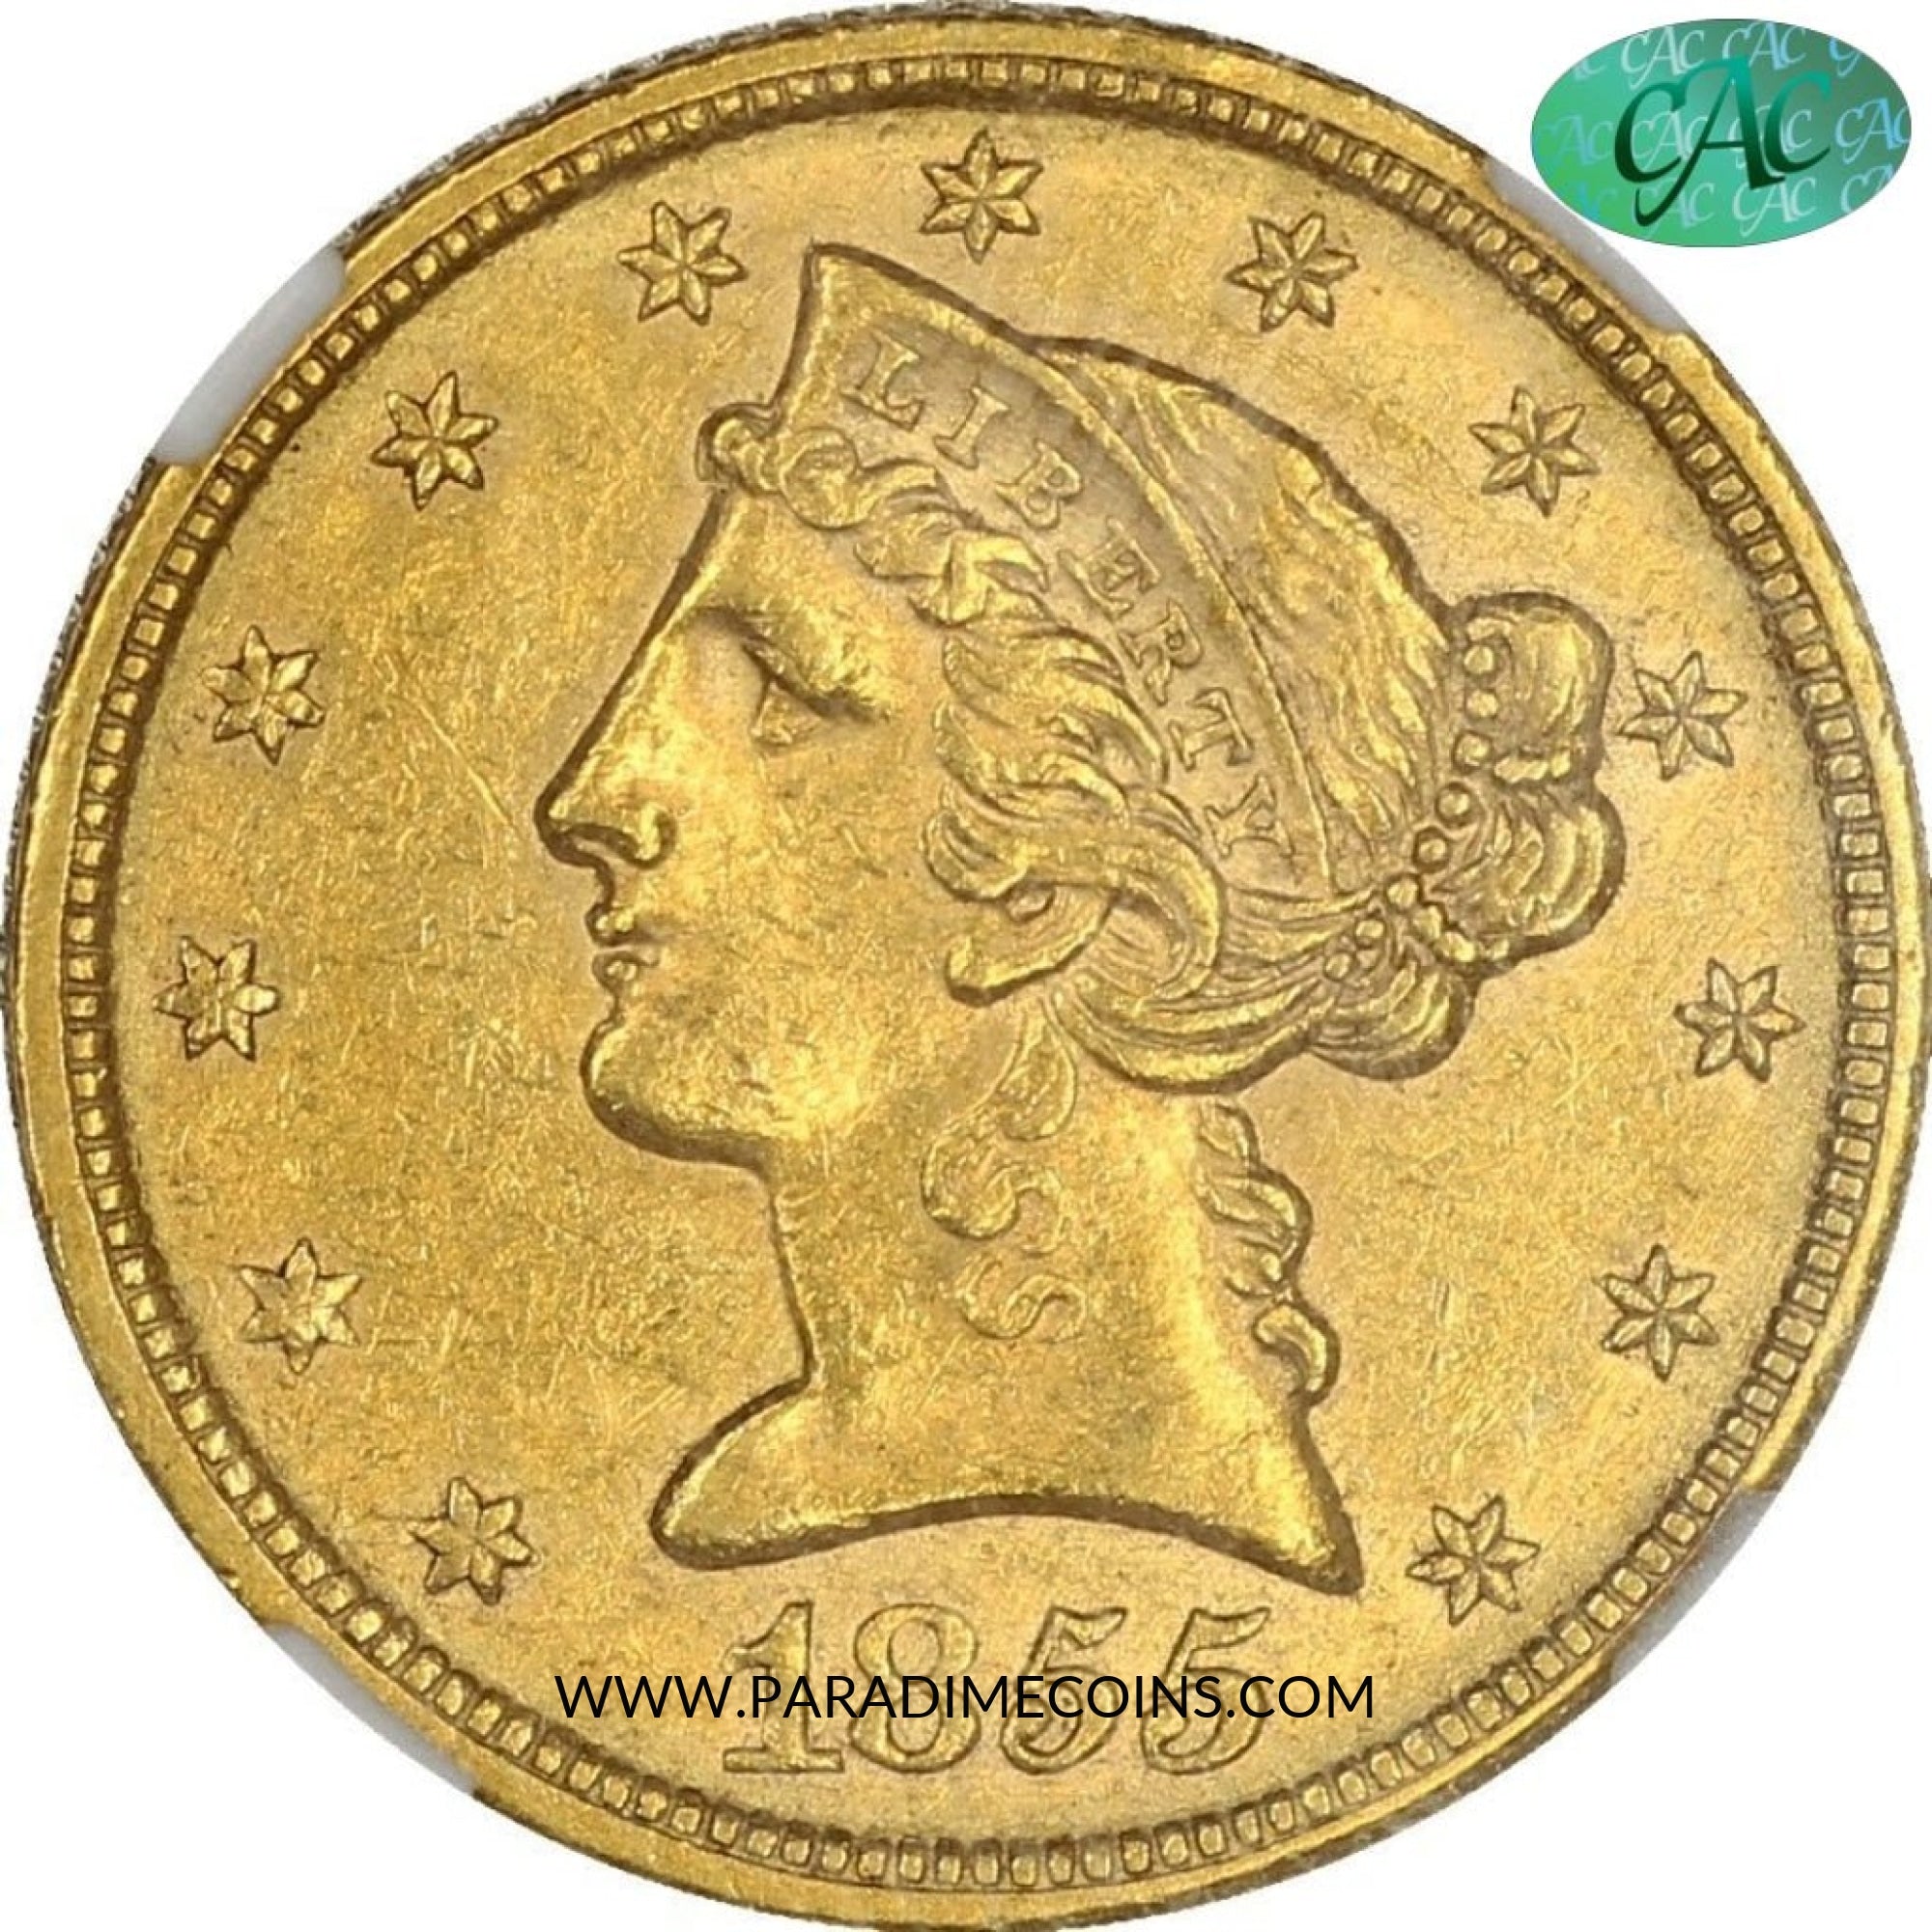 1858-C $5 AU58+ NGC CAC - Paradime Coins | PCGS NGC CACG CAC Rare US Numismatic Coins For Sale